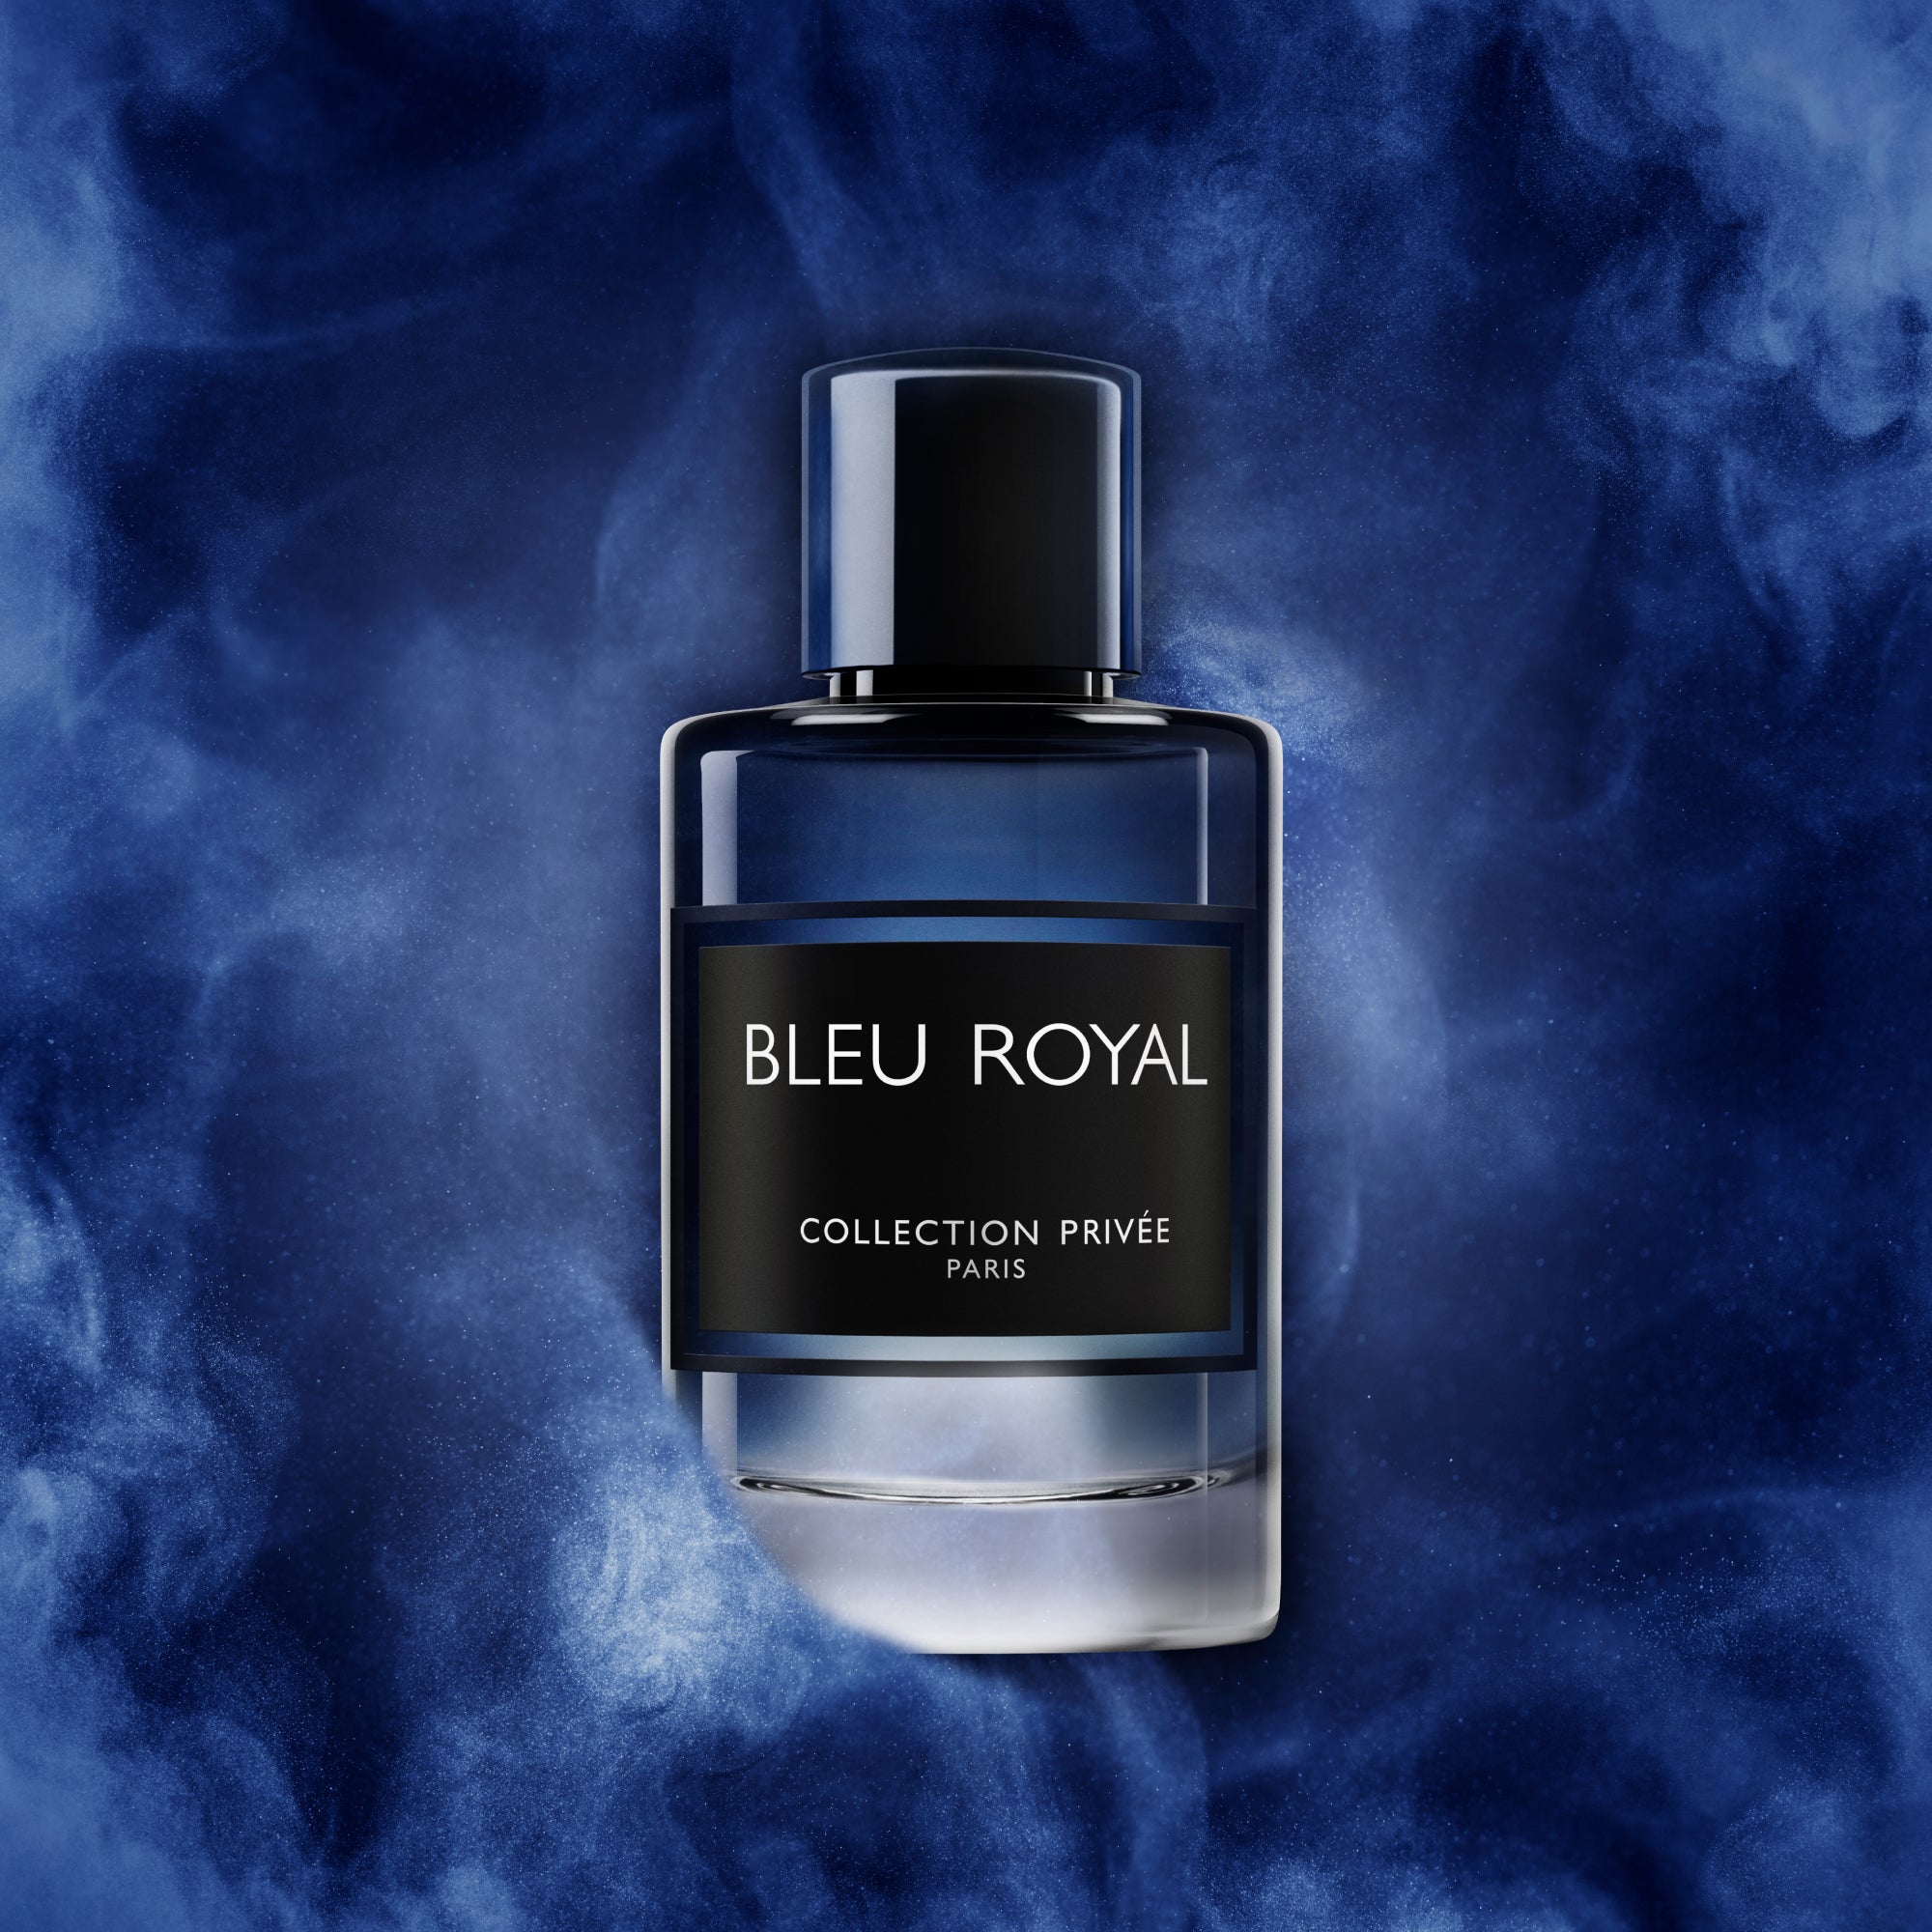 blue paris perfume